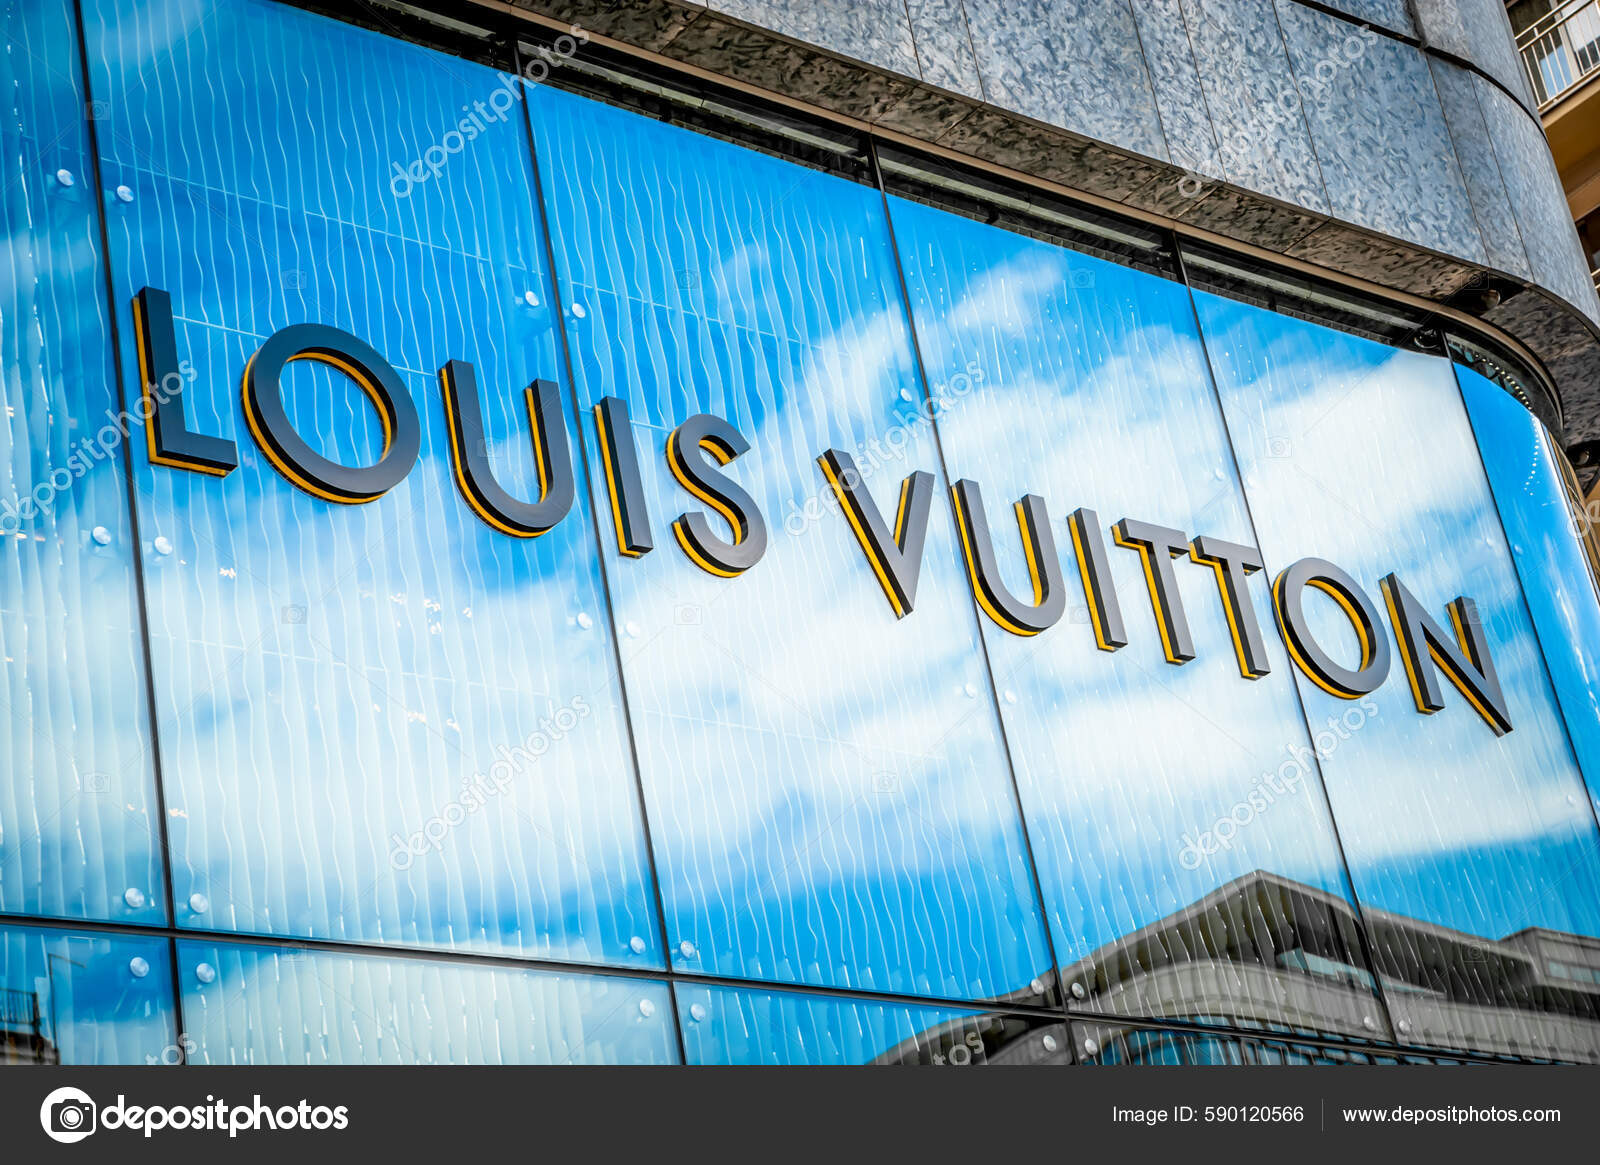 Louis Vuitton Warsaw Store in Warsaw, Poland